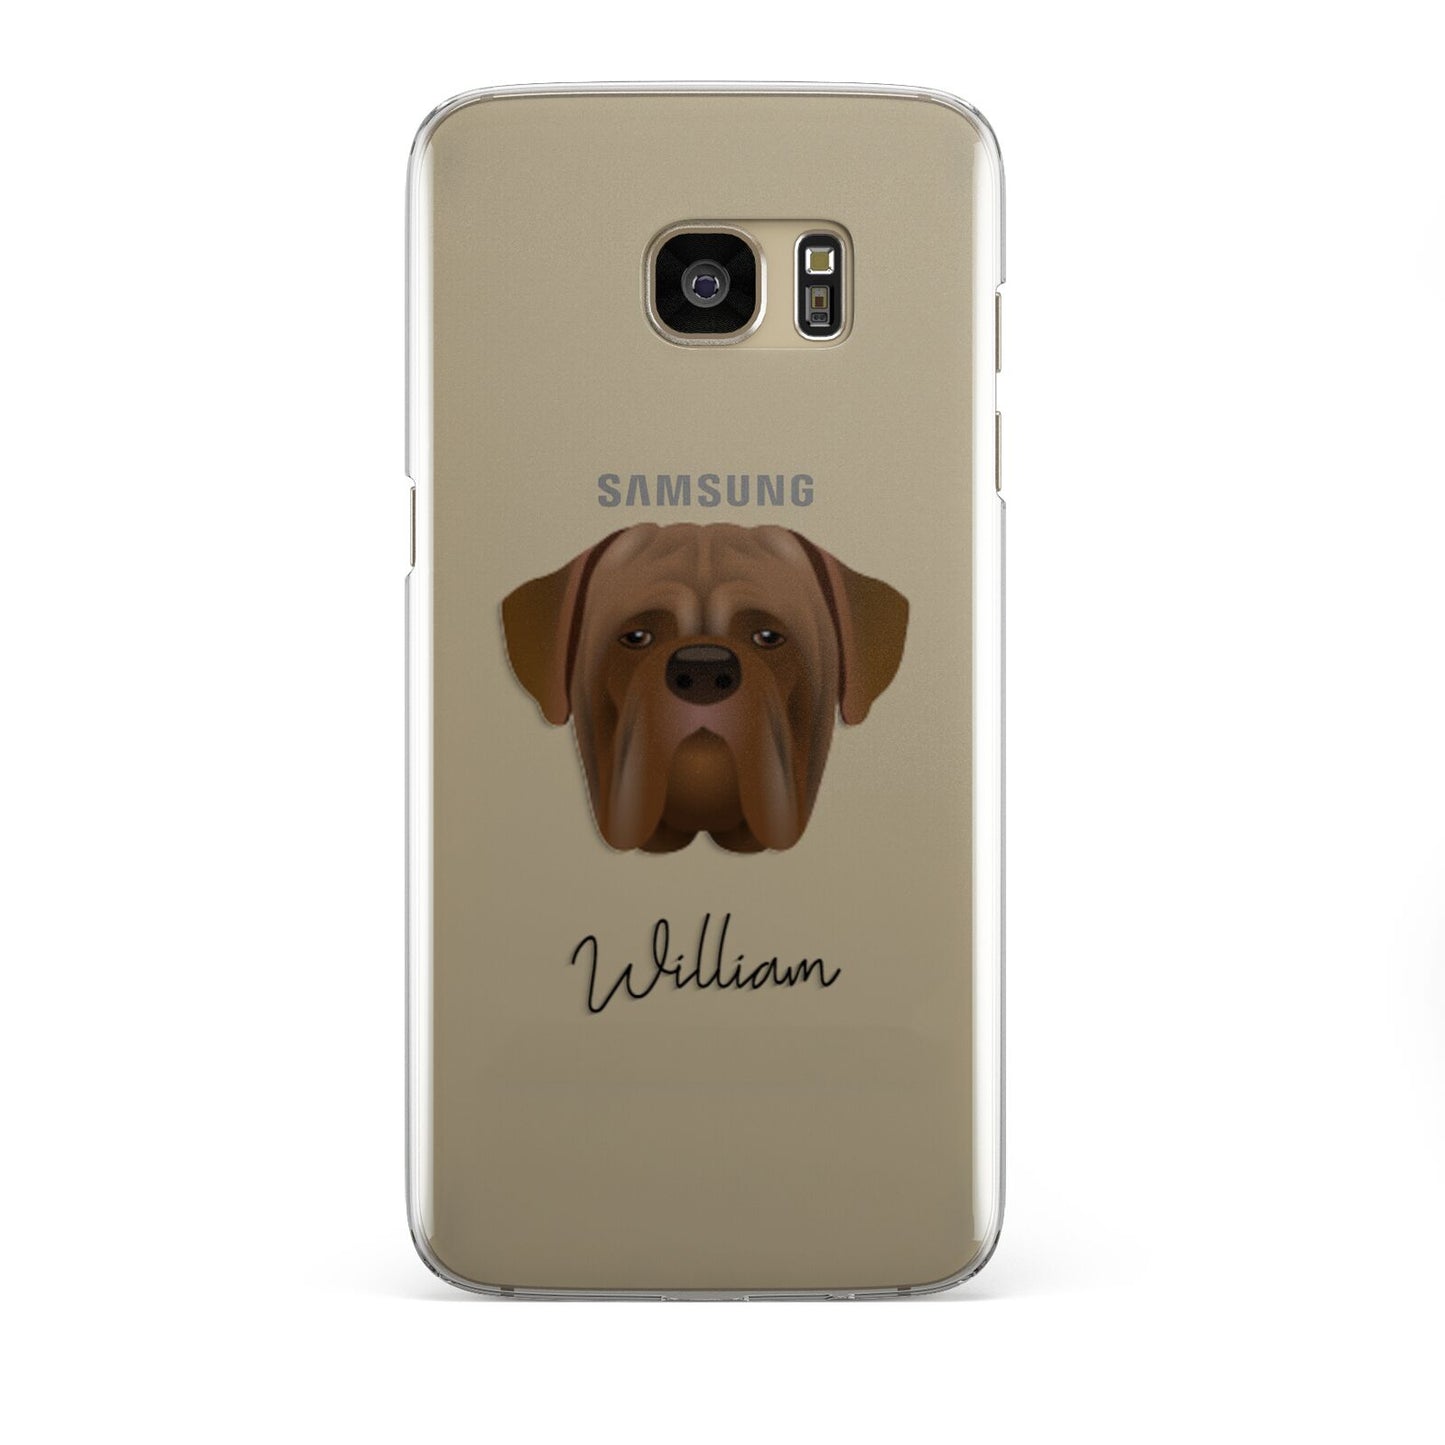 Dogue de Bordeaux Personalised Samsung Galaxy S7 Edge Case